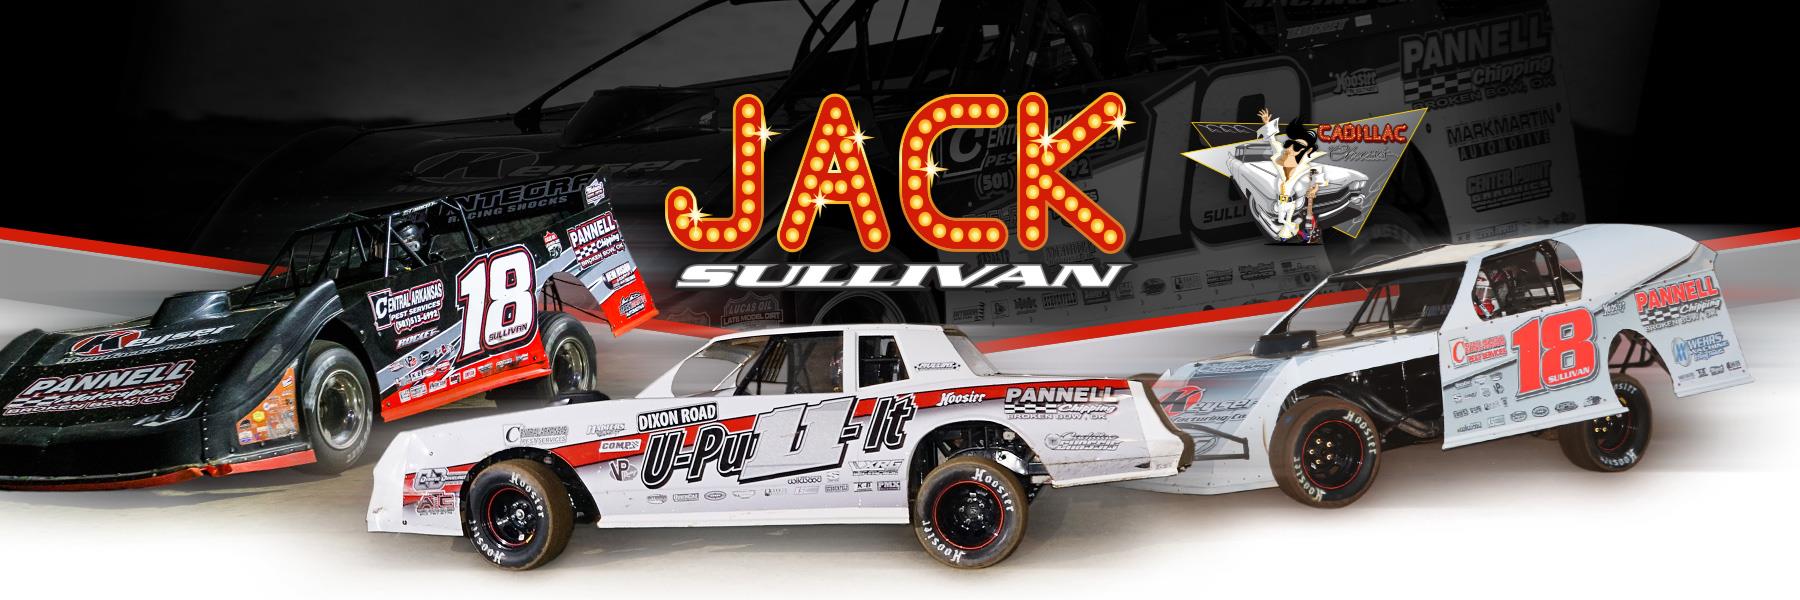 Jack Sullivan